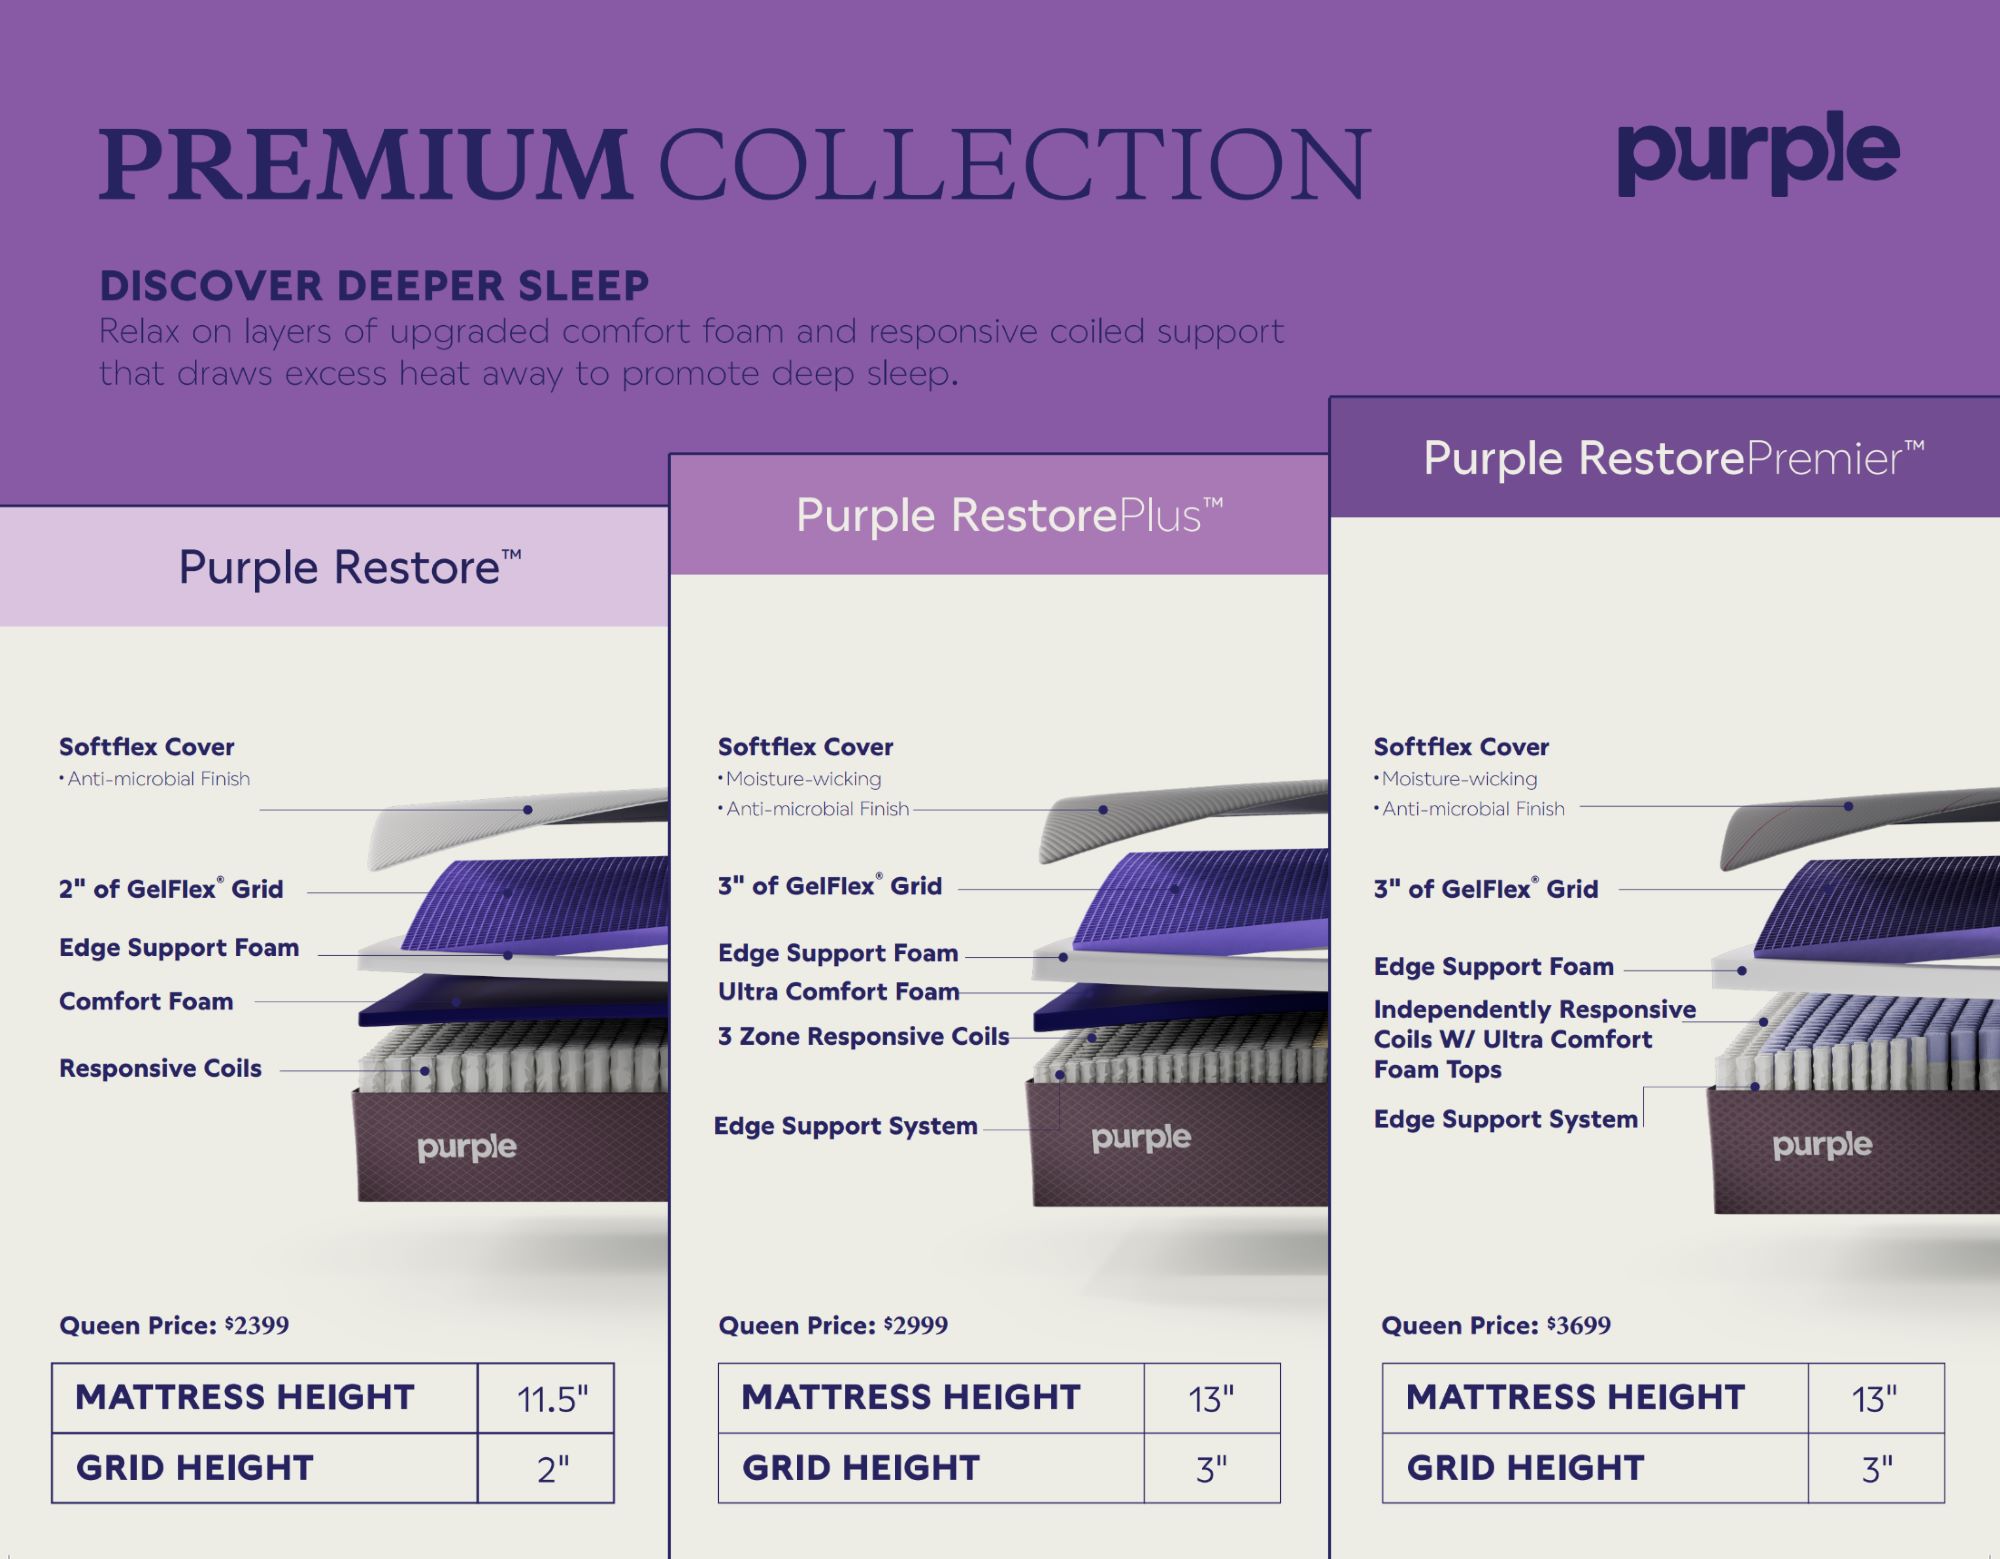 Metro Mattress Purple Premium Collection Features Comparison